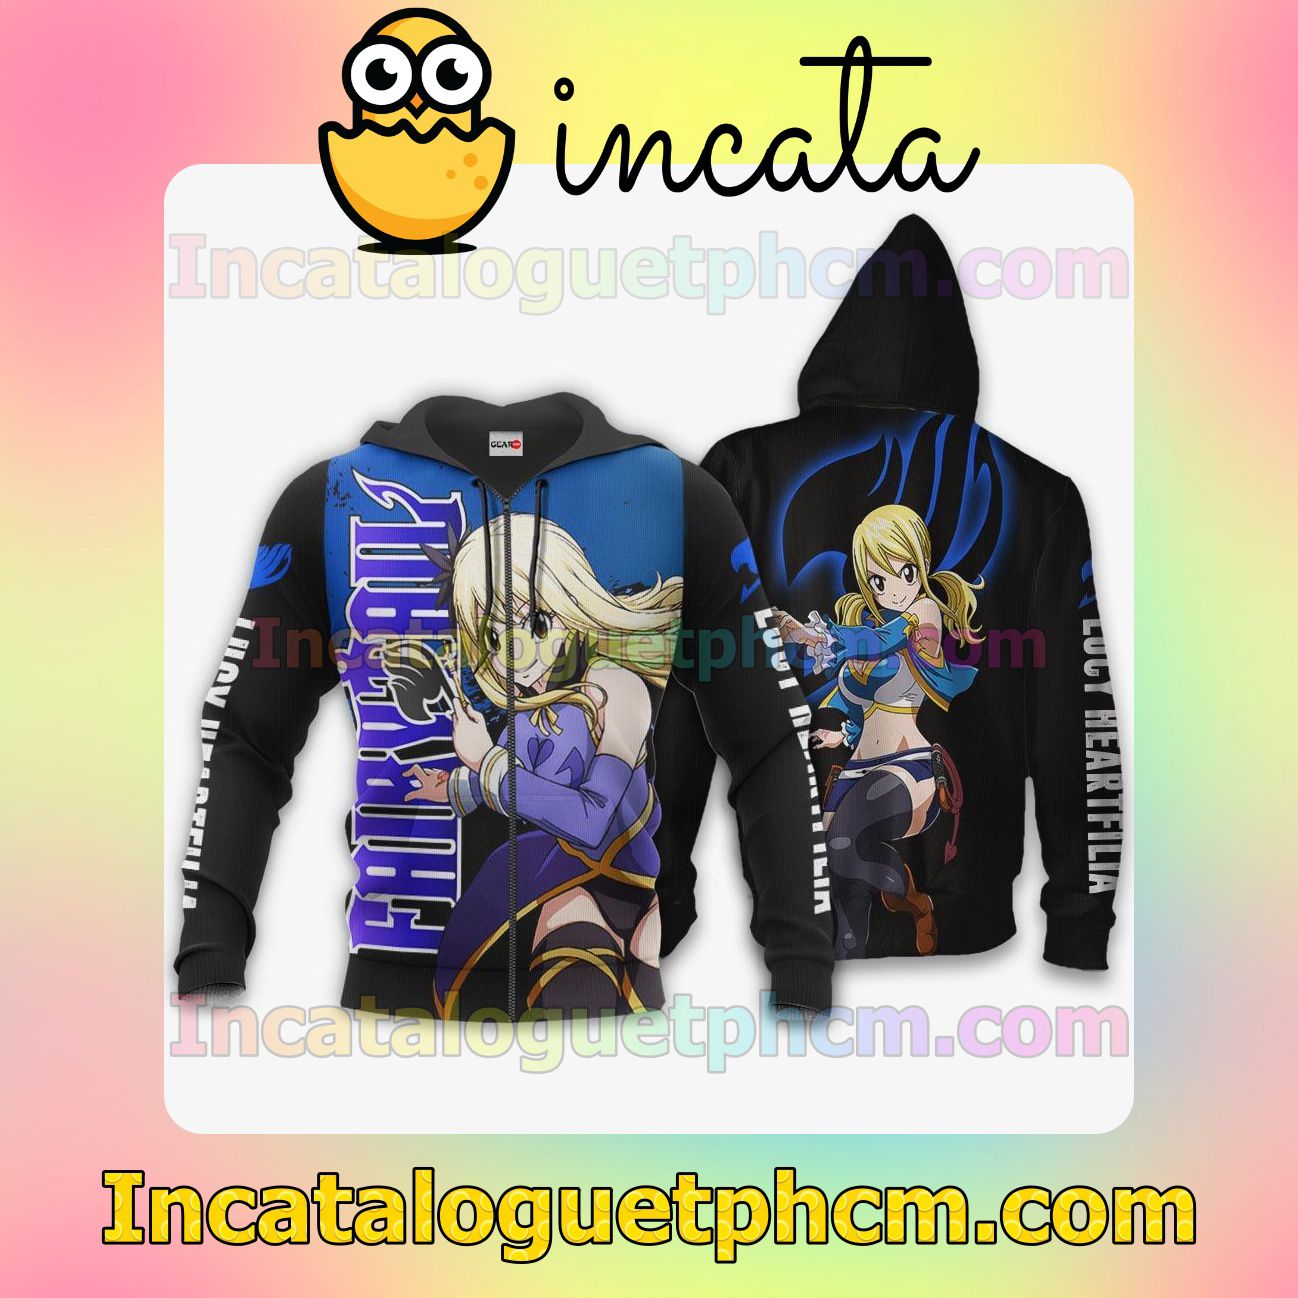 Lucy Heartfilia Fairy Tail Anime Clothing Merch Zip Hoodie Jacket Shirts